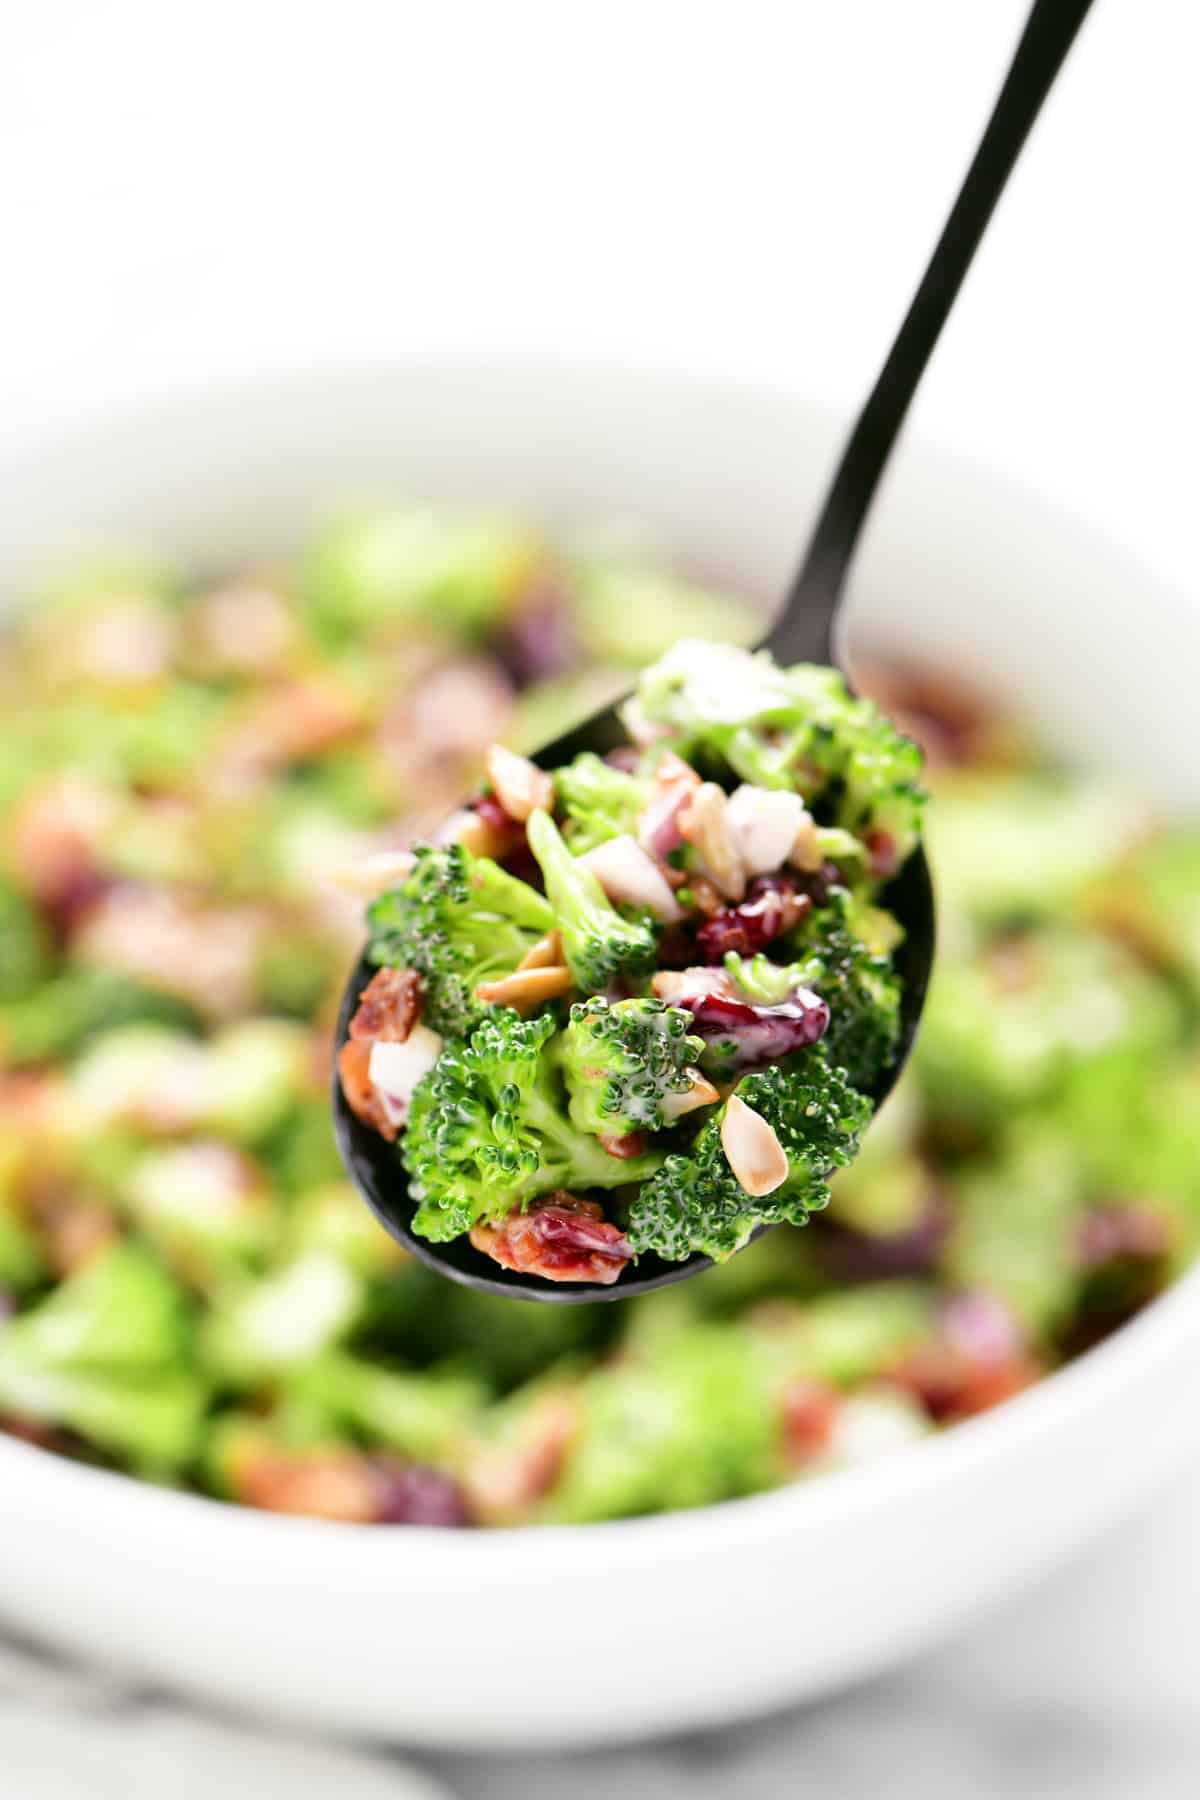 a spoonful of broccoli salad